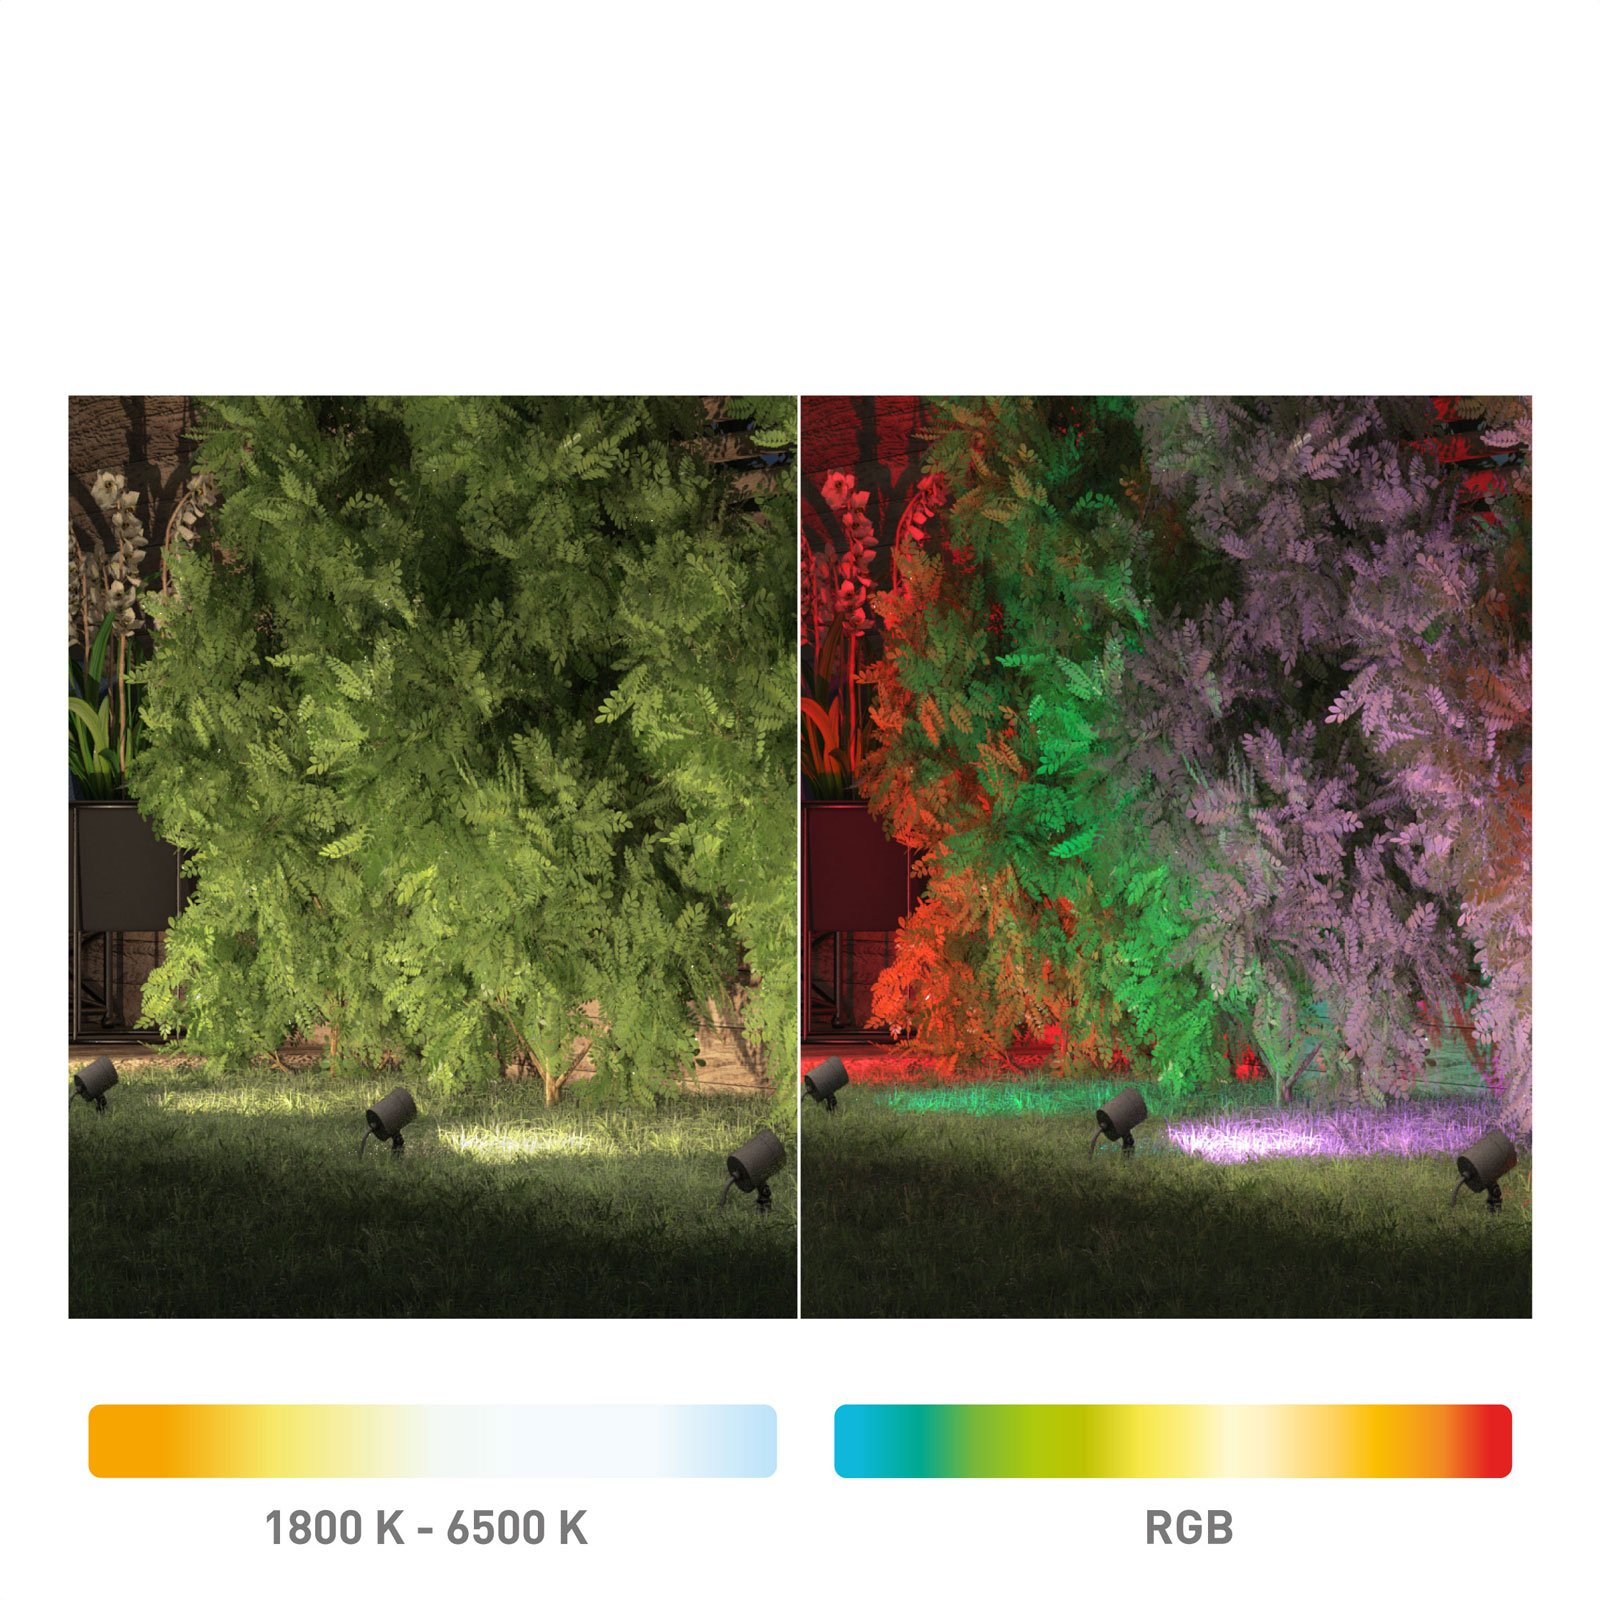 Müller Licht tint Flores -LED-kohdevalo ulos 3 kpl